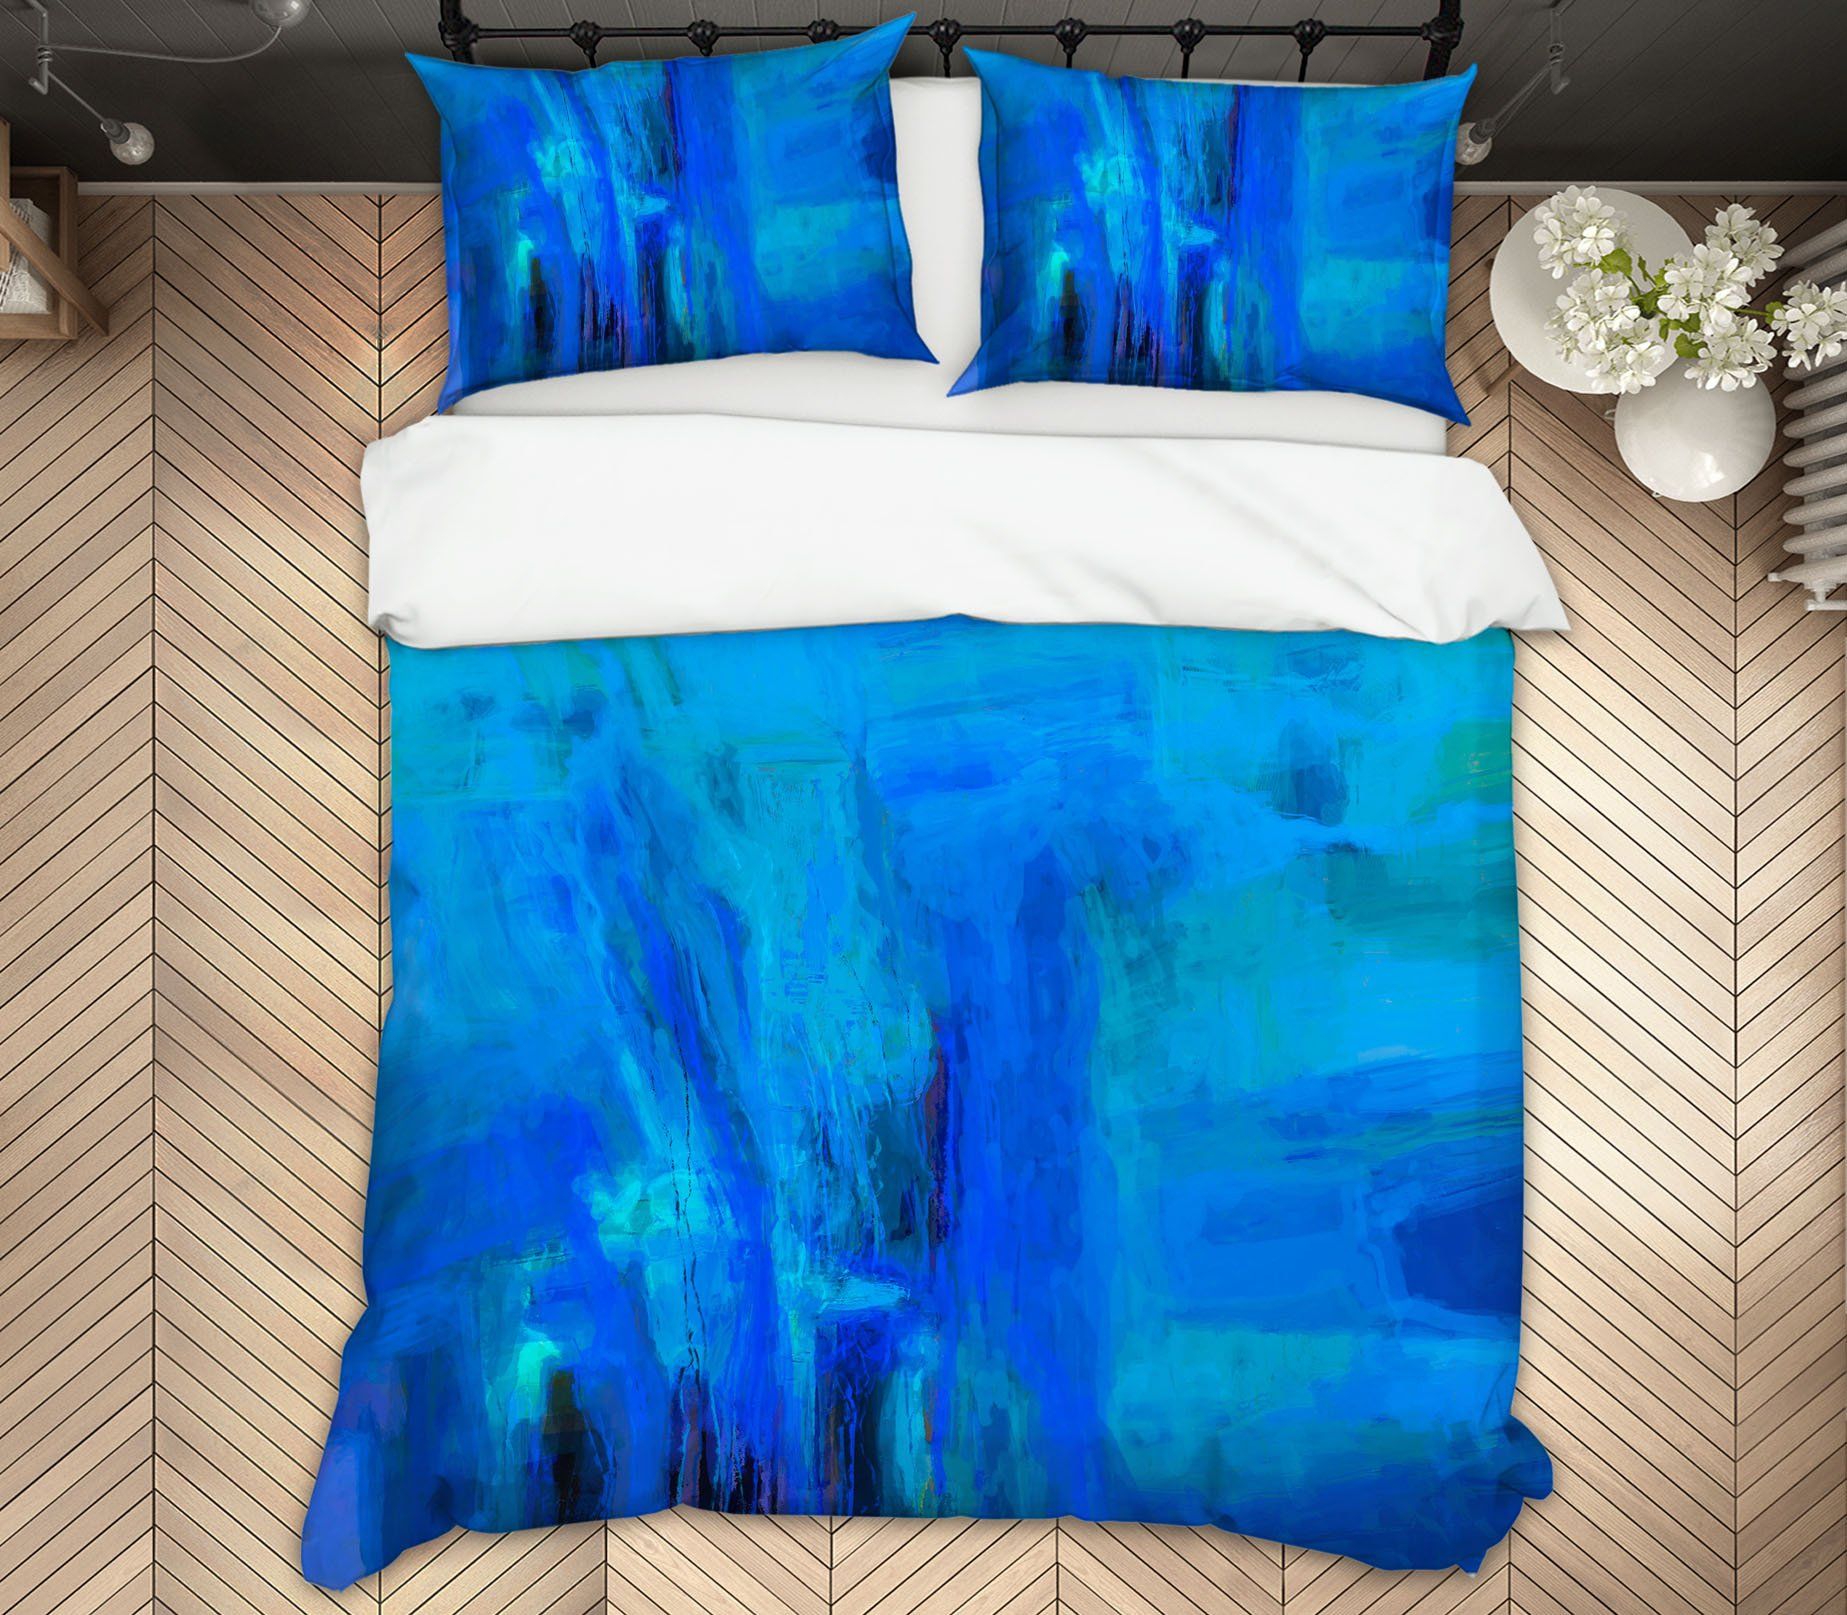 3D Blue Graffiti 2121 Michael Tienhaara Bedding Bed Pillowcases Quilt Quiet Covers AJ Creativity Home 